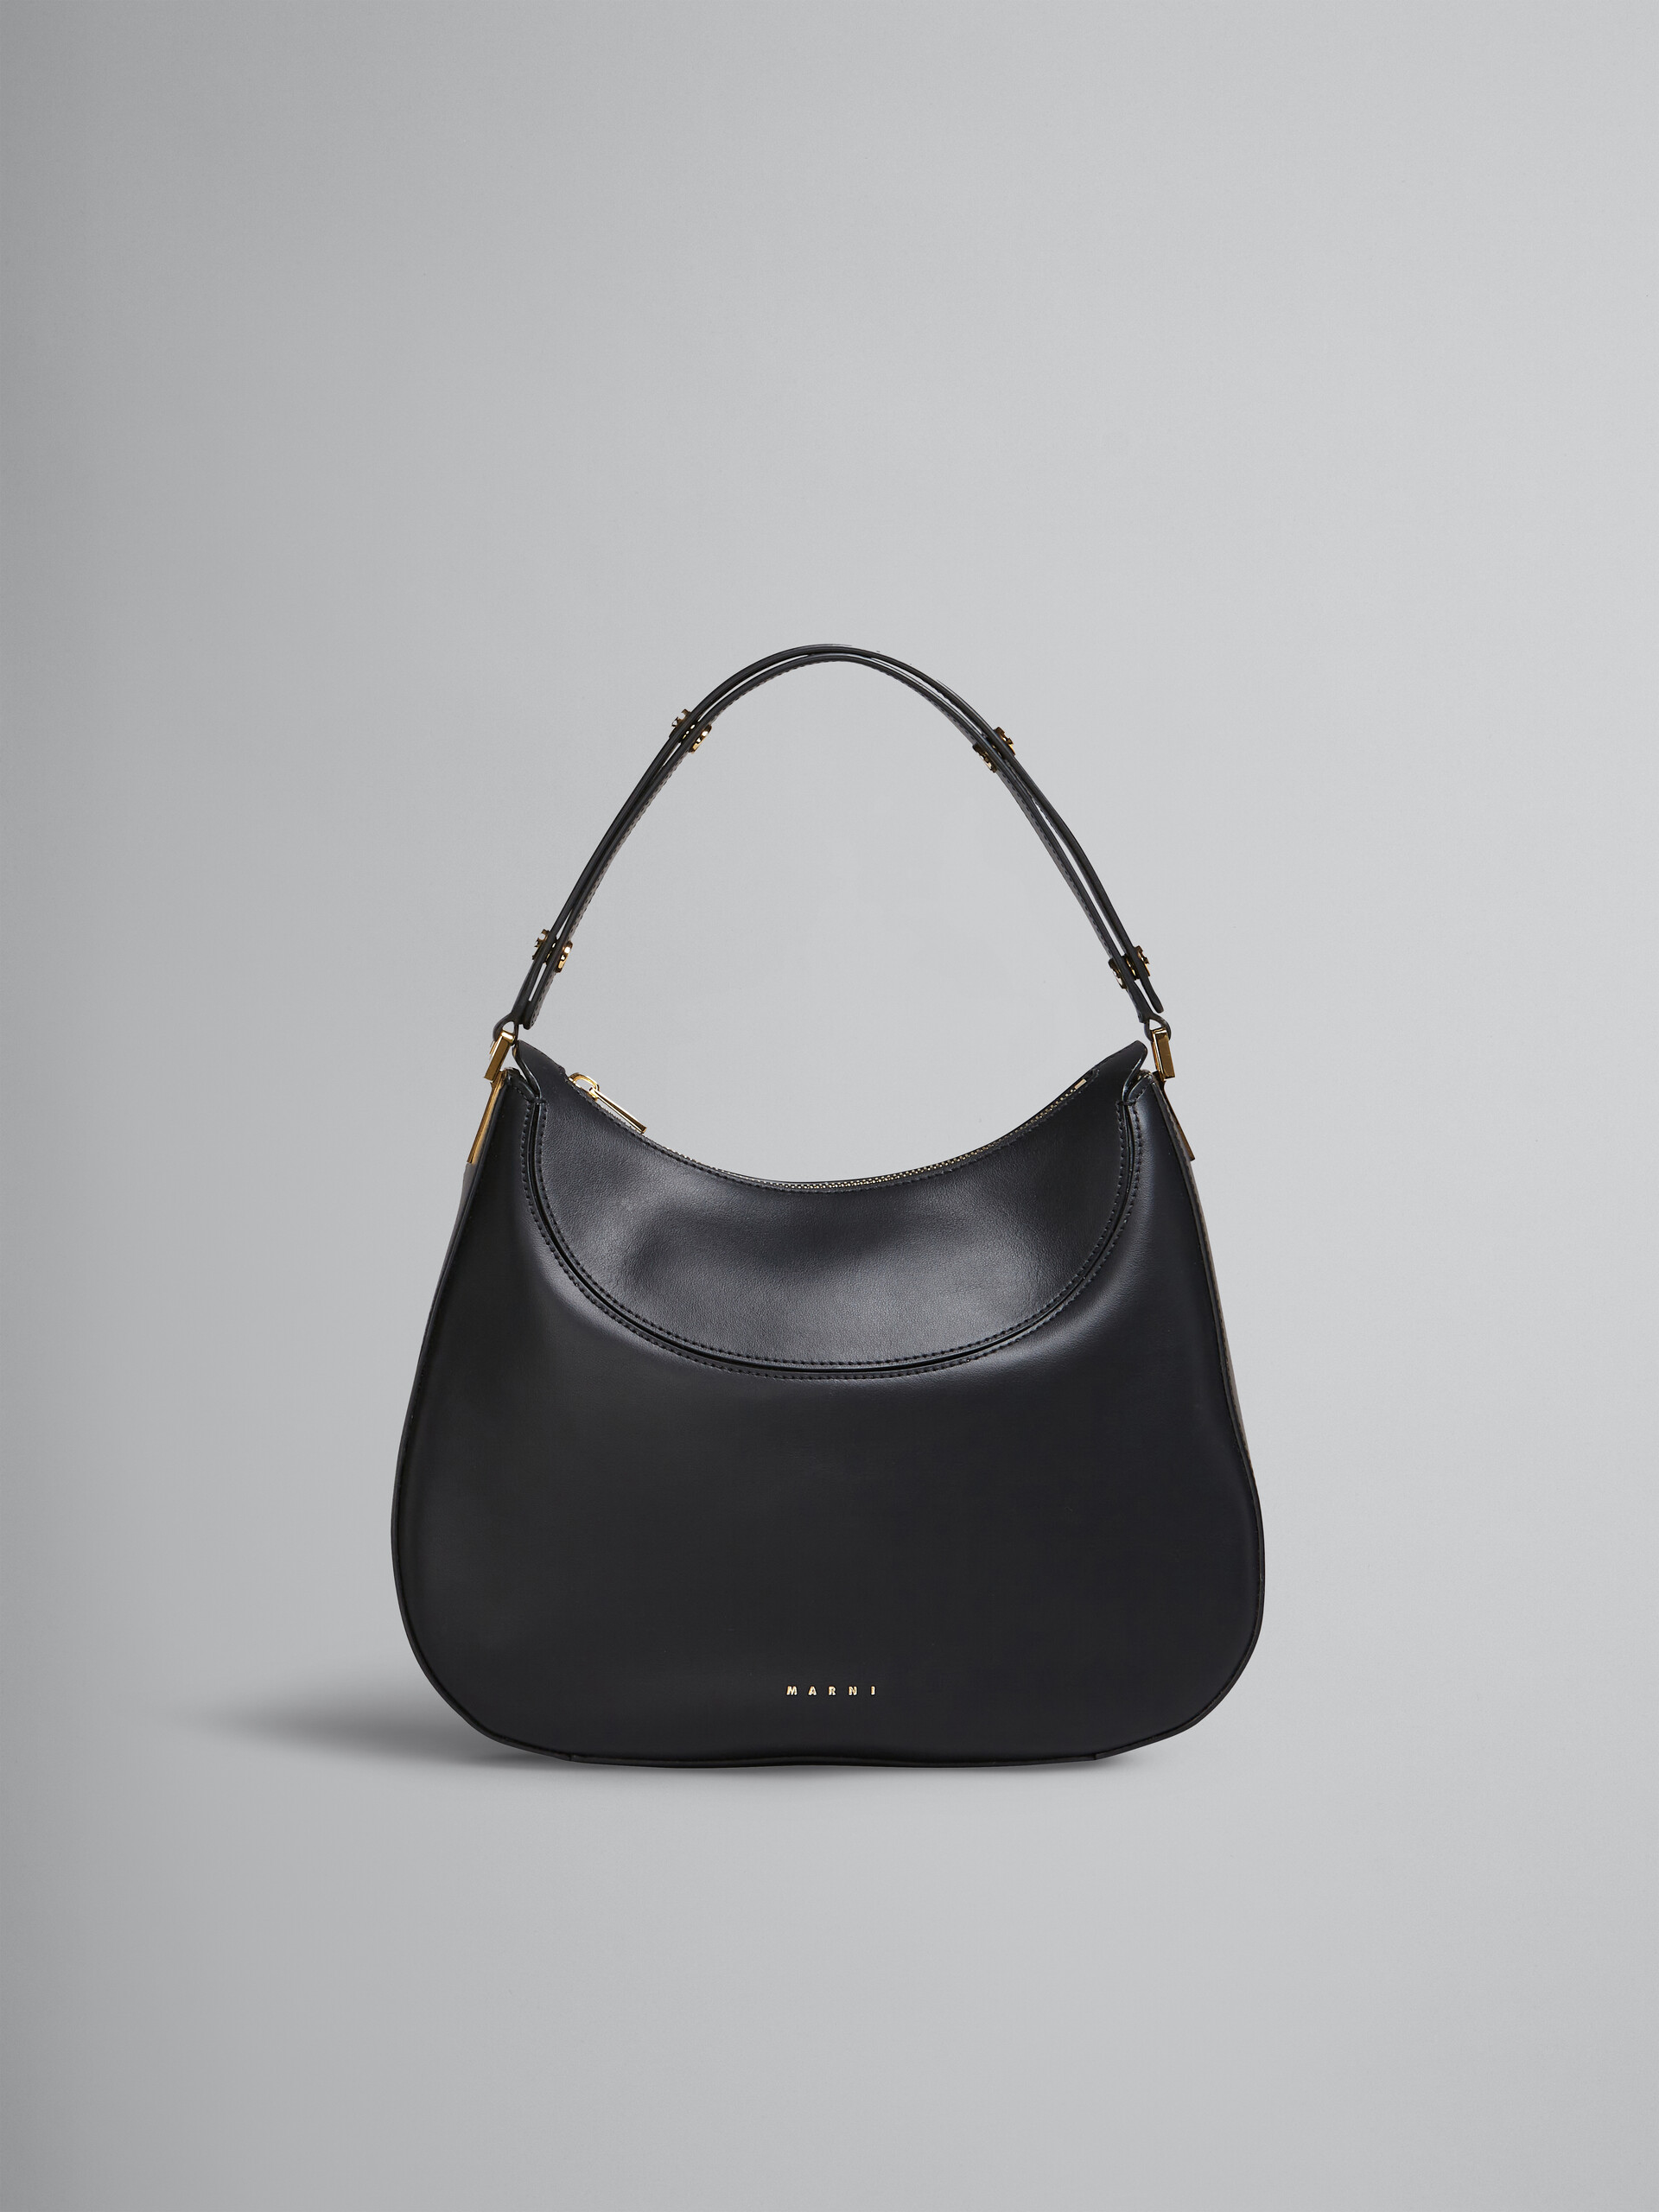 Milano large bag in black leather - Handbags - Image 1